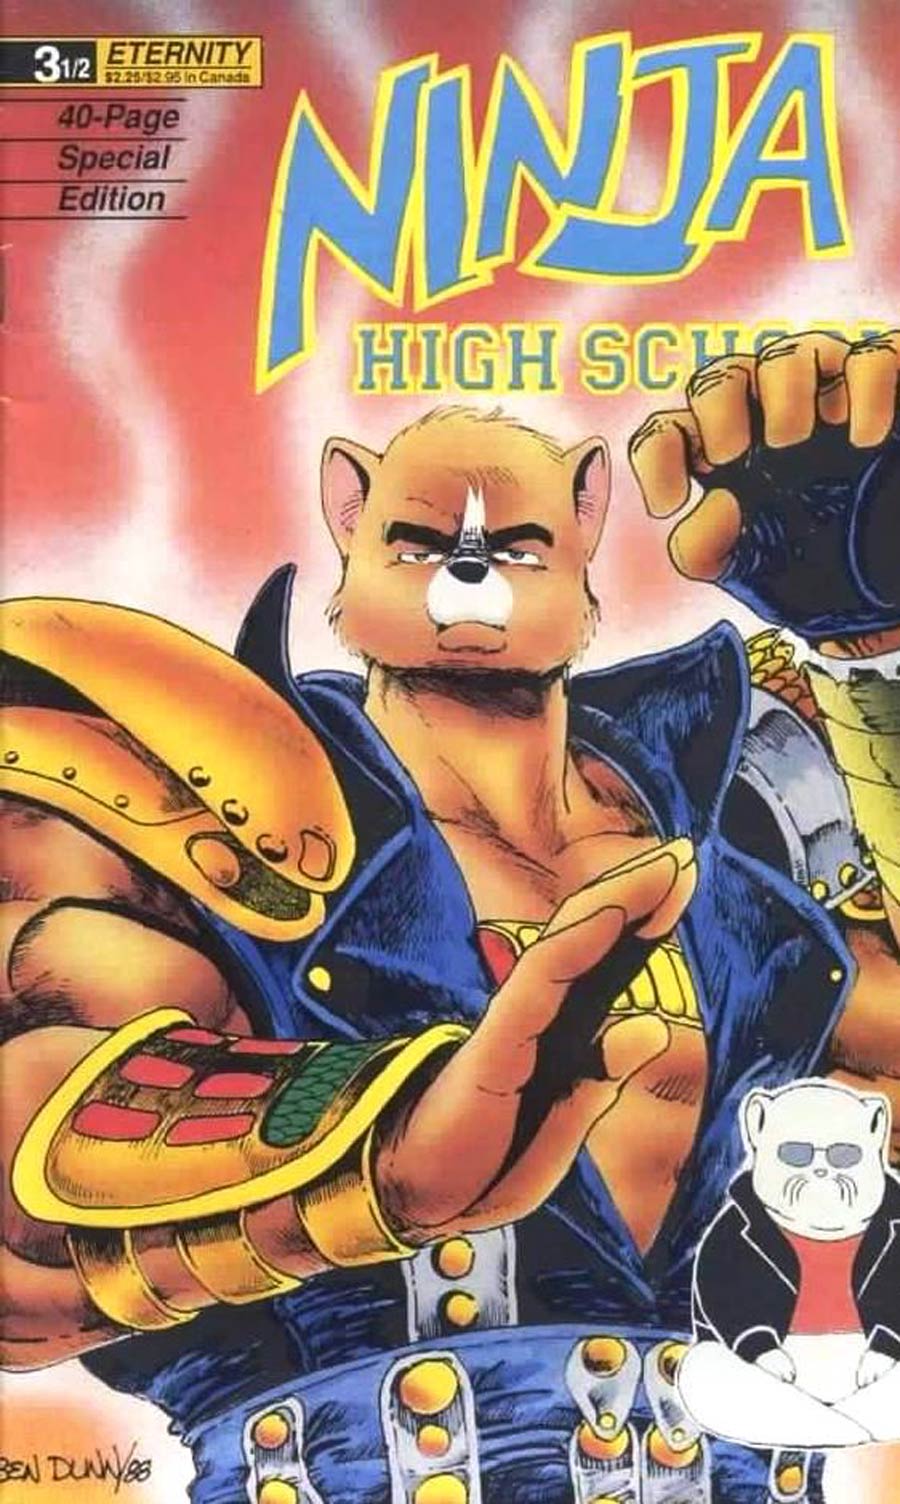 Ninja High School Special Edition #3 1/2